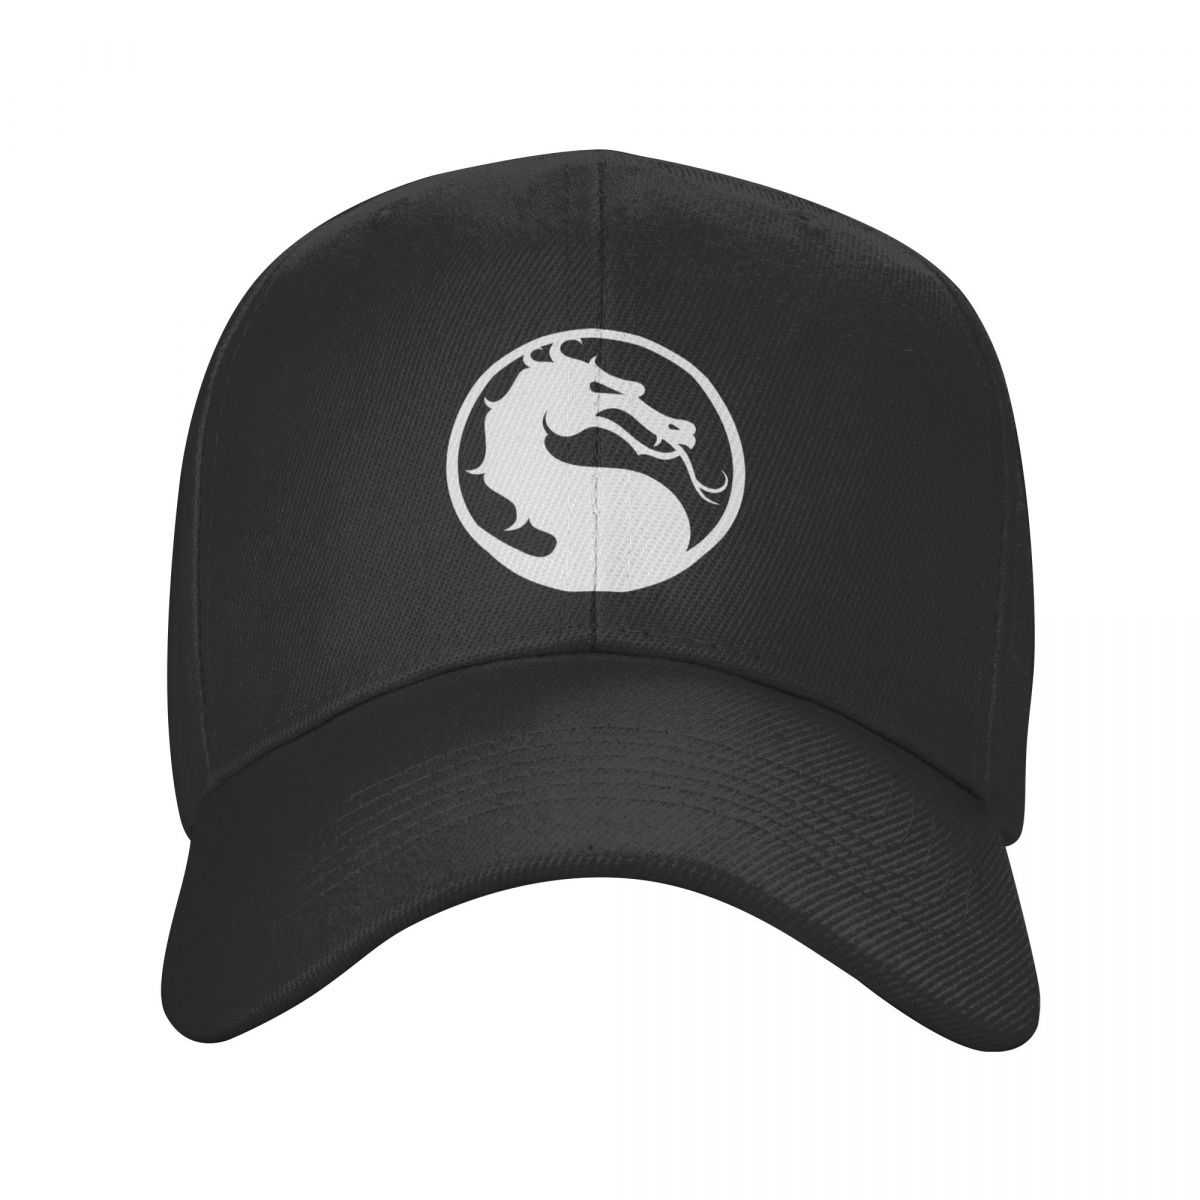 Mortal Kombat - Snapback Baseball Cap - Summer Hat For Men and Women-Dark Grey-Adjustable Cap-